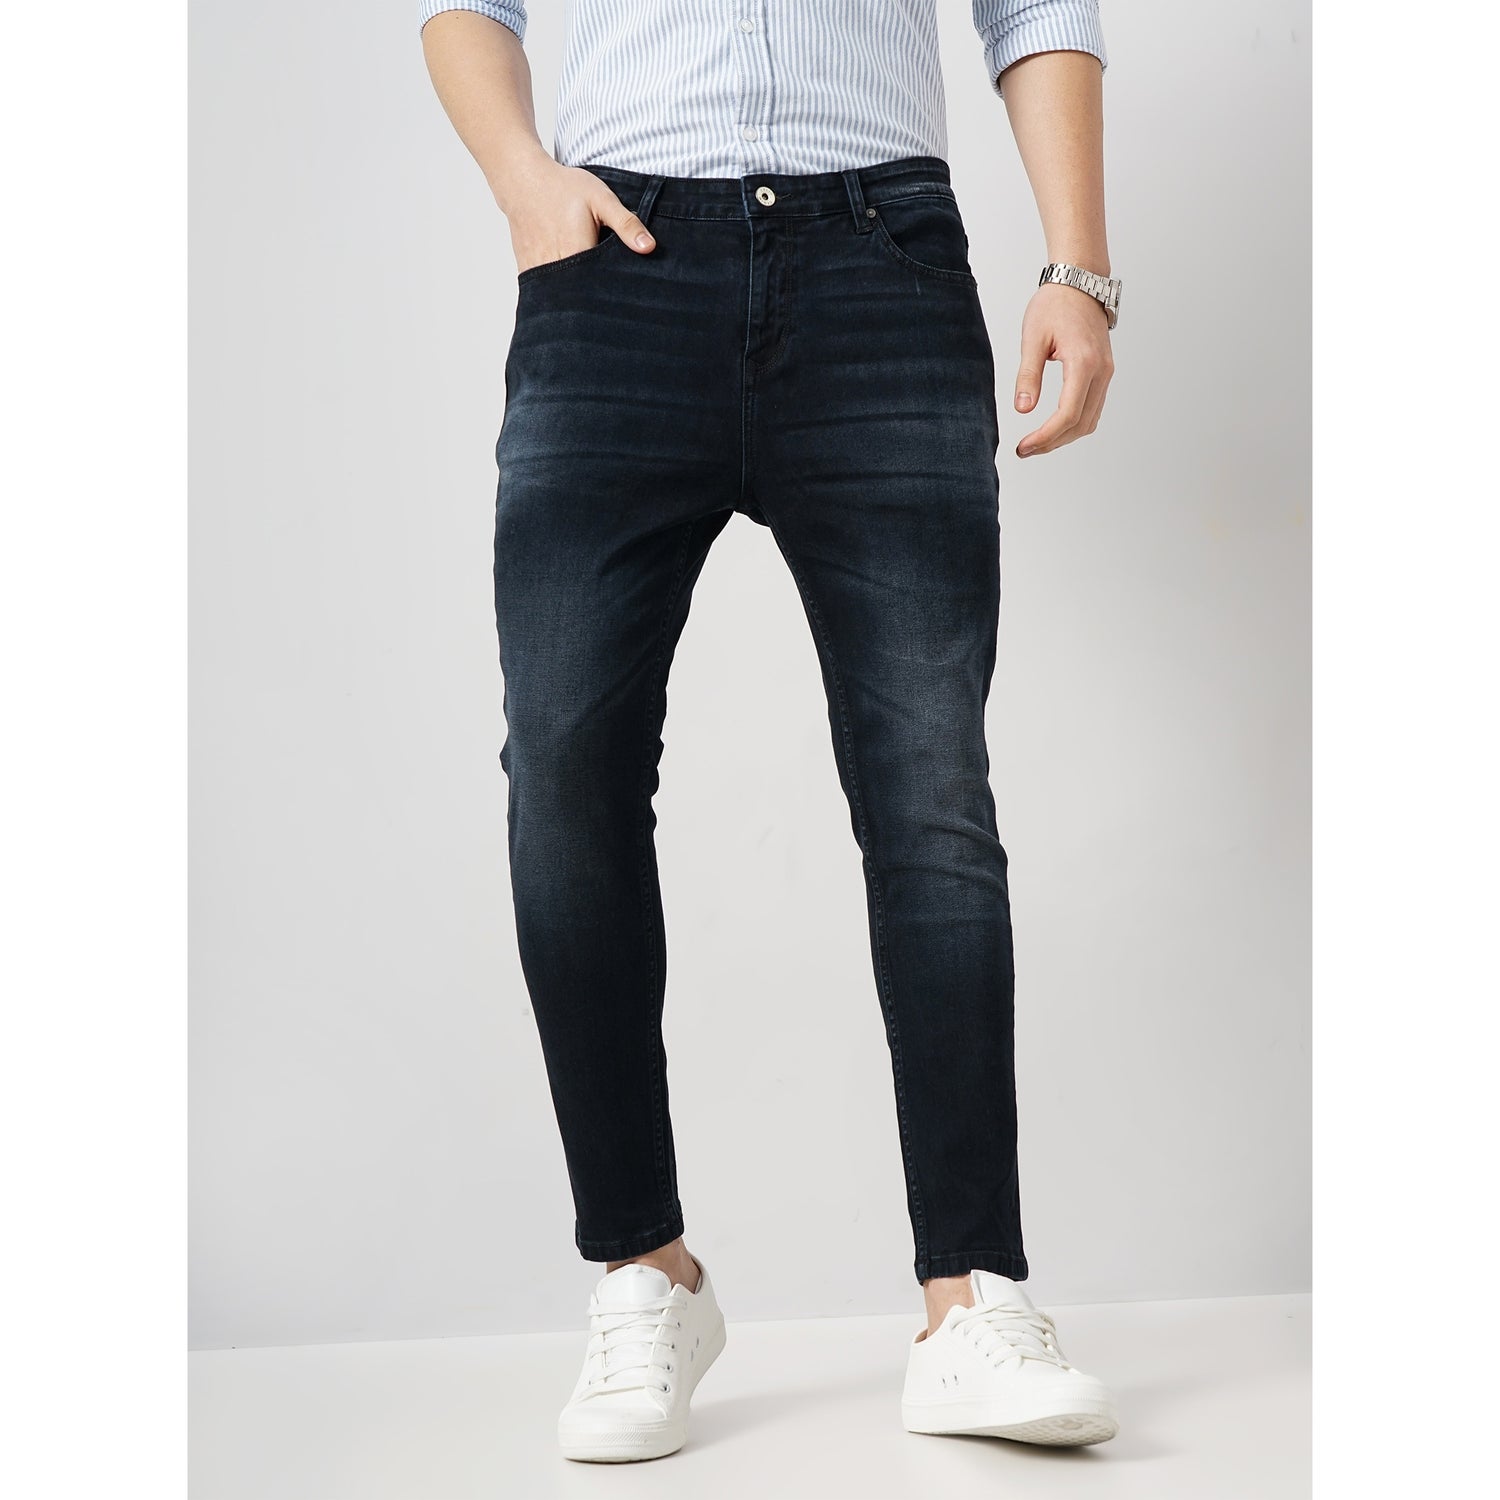 Men Black Solid Skinny Fit Cotton Knit Dobby Denim Jeans (GOANKLE11)